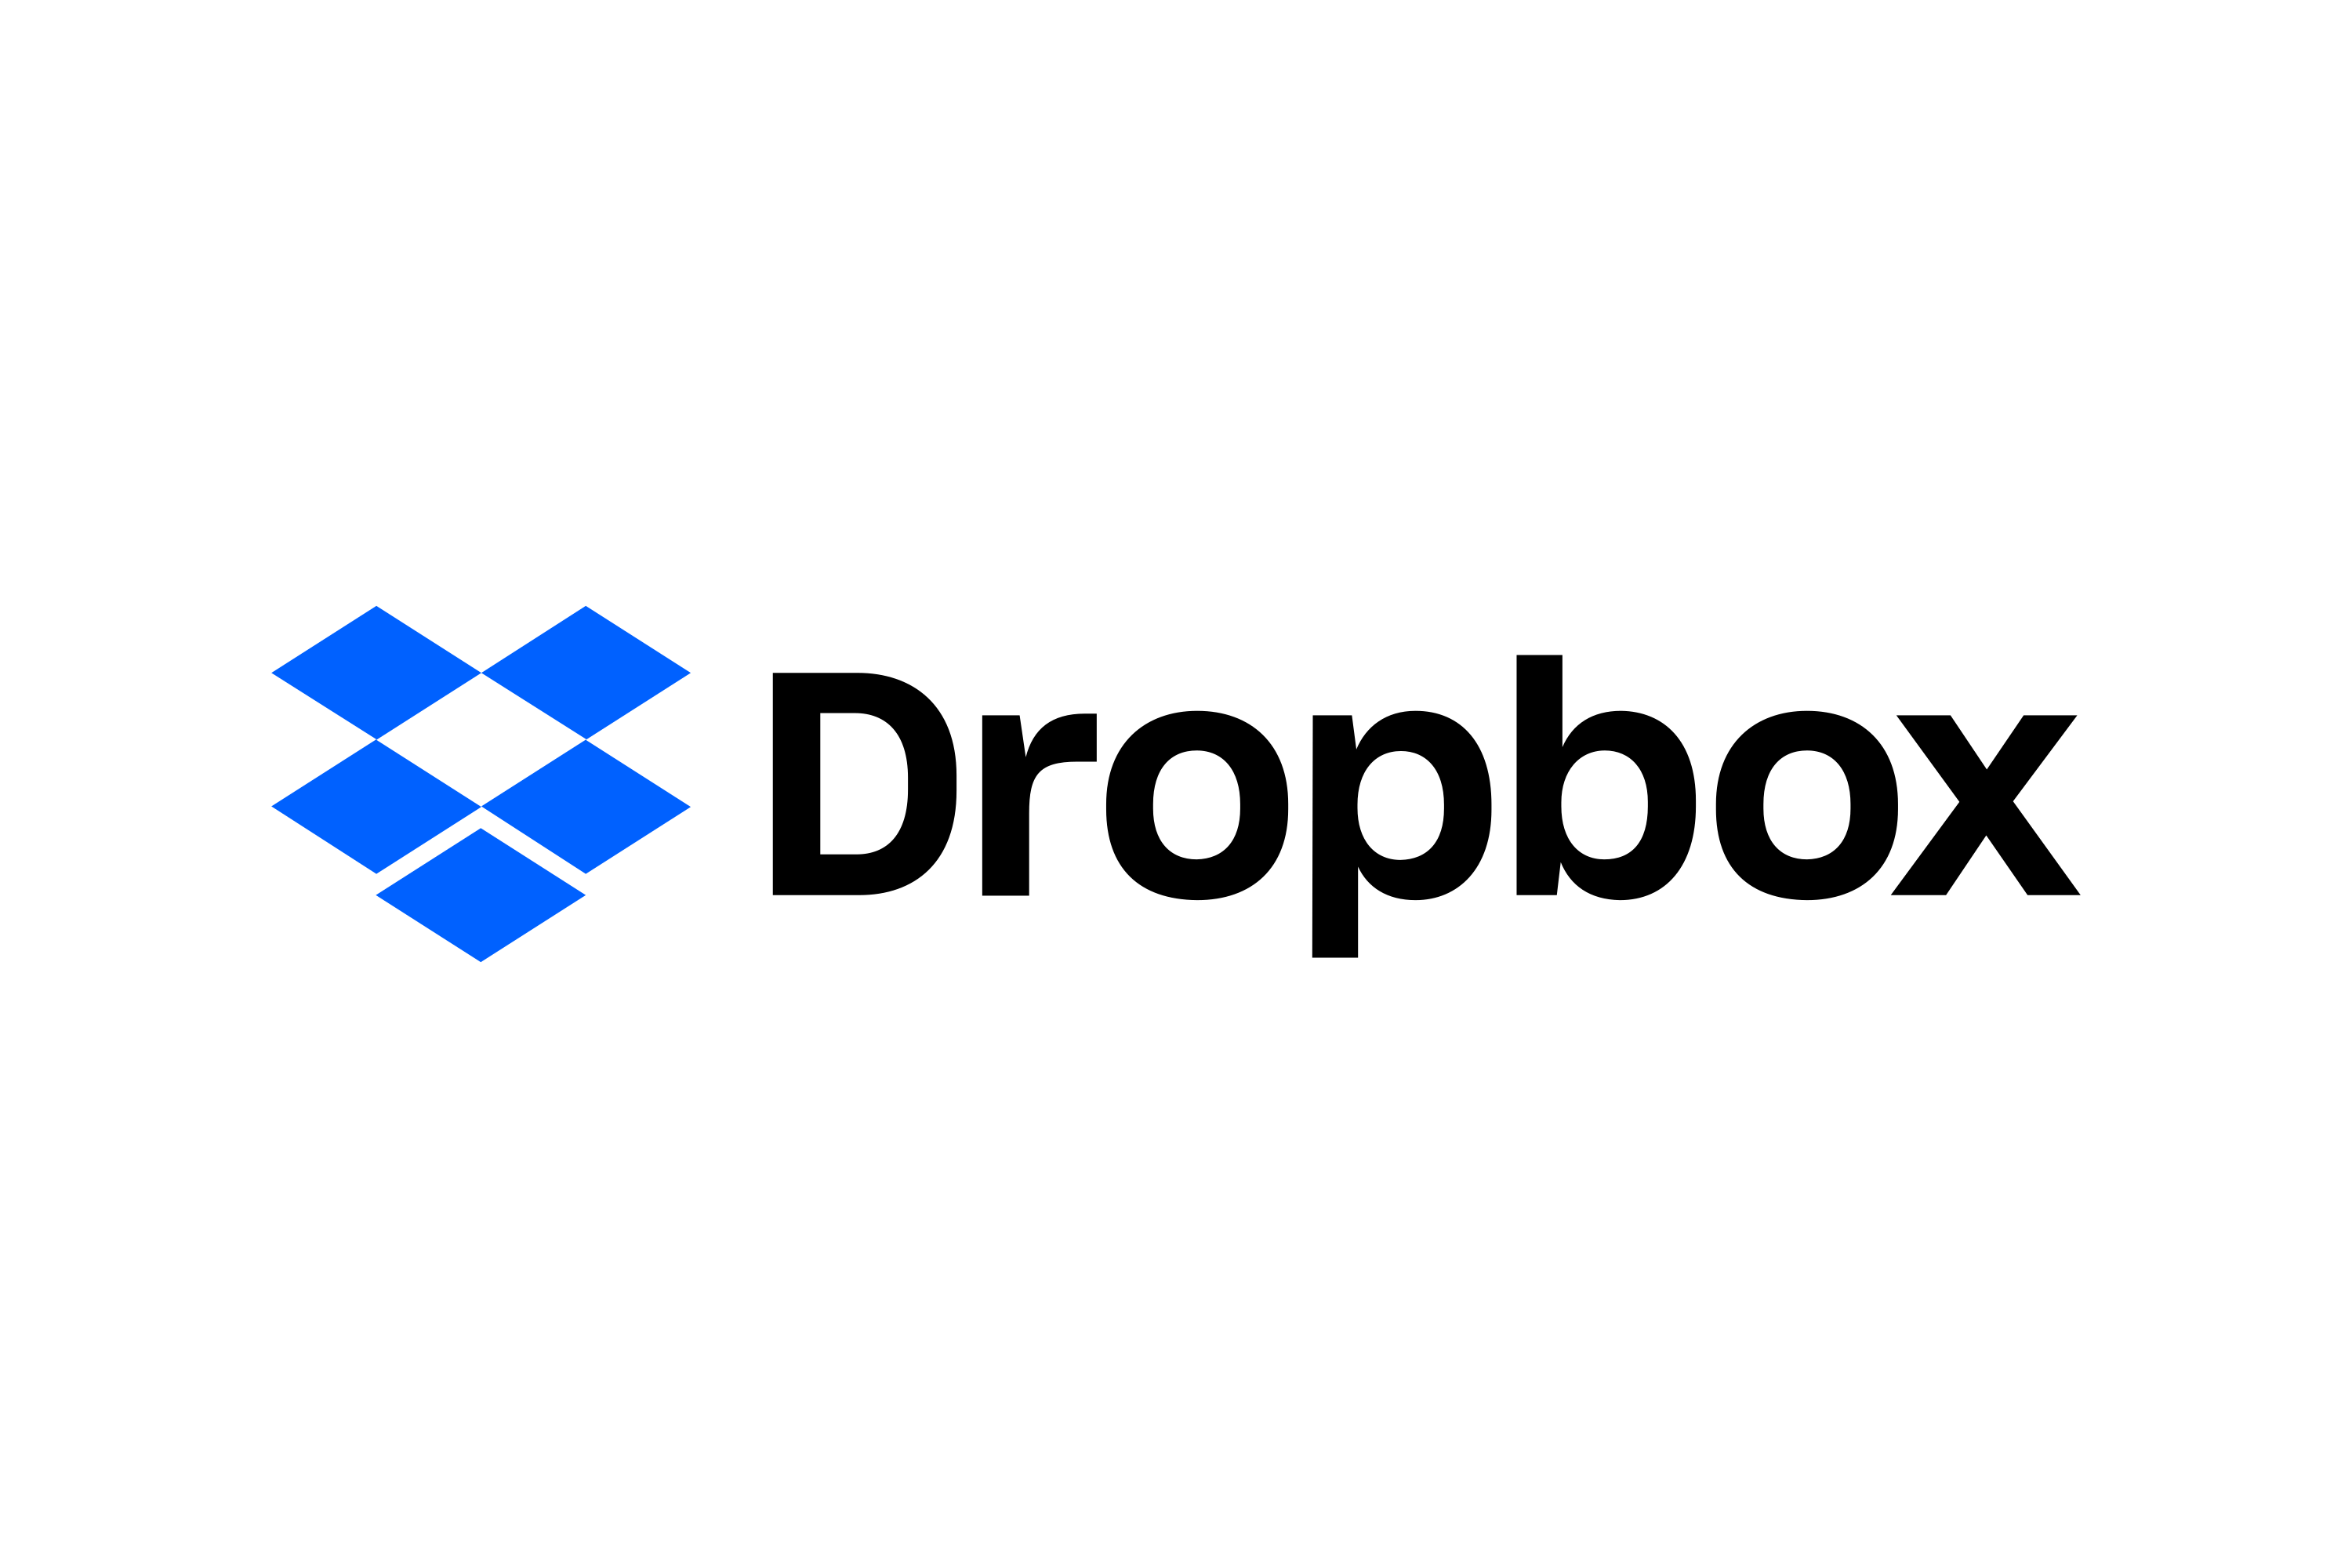 dropbox logo wiki commons svg